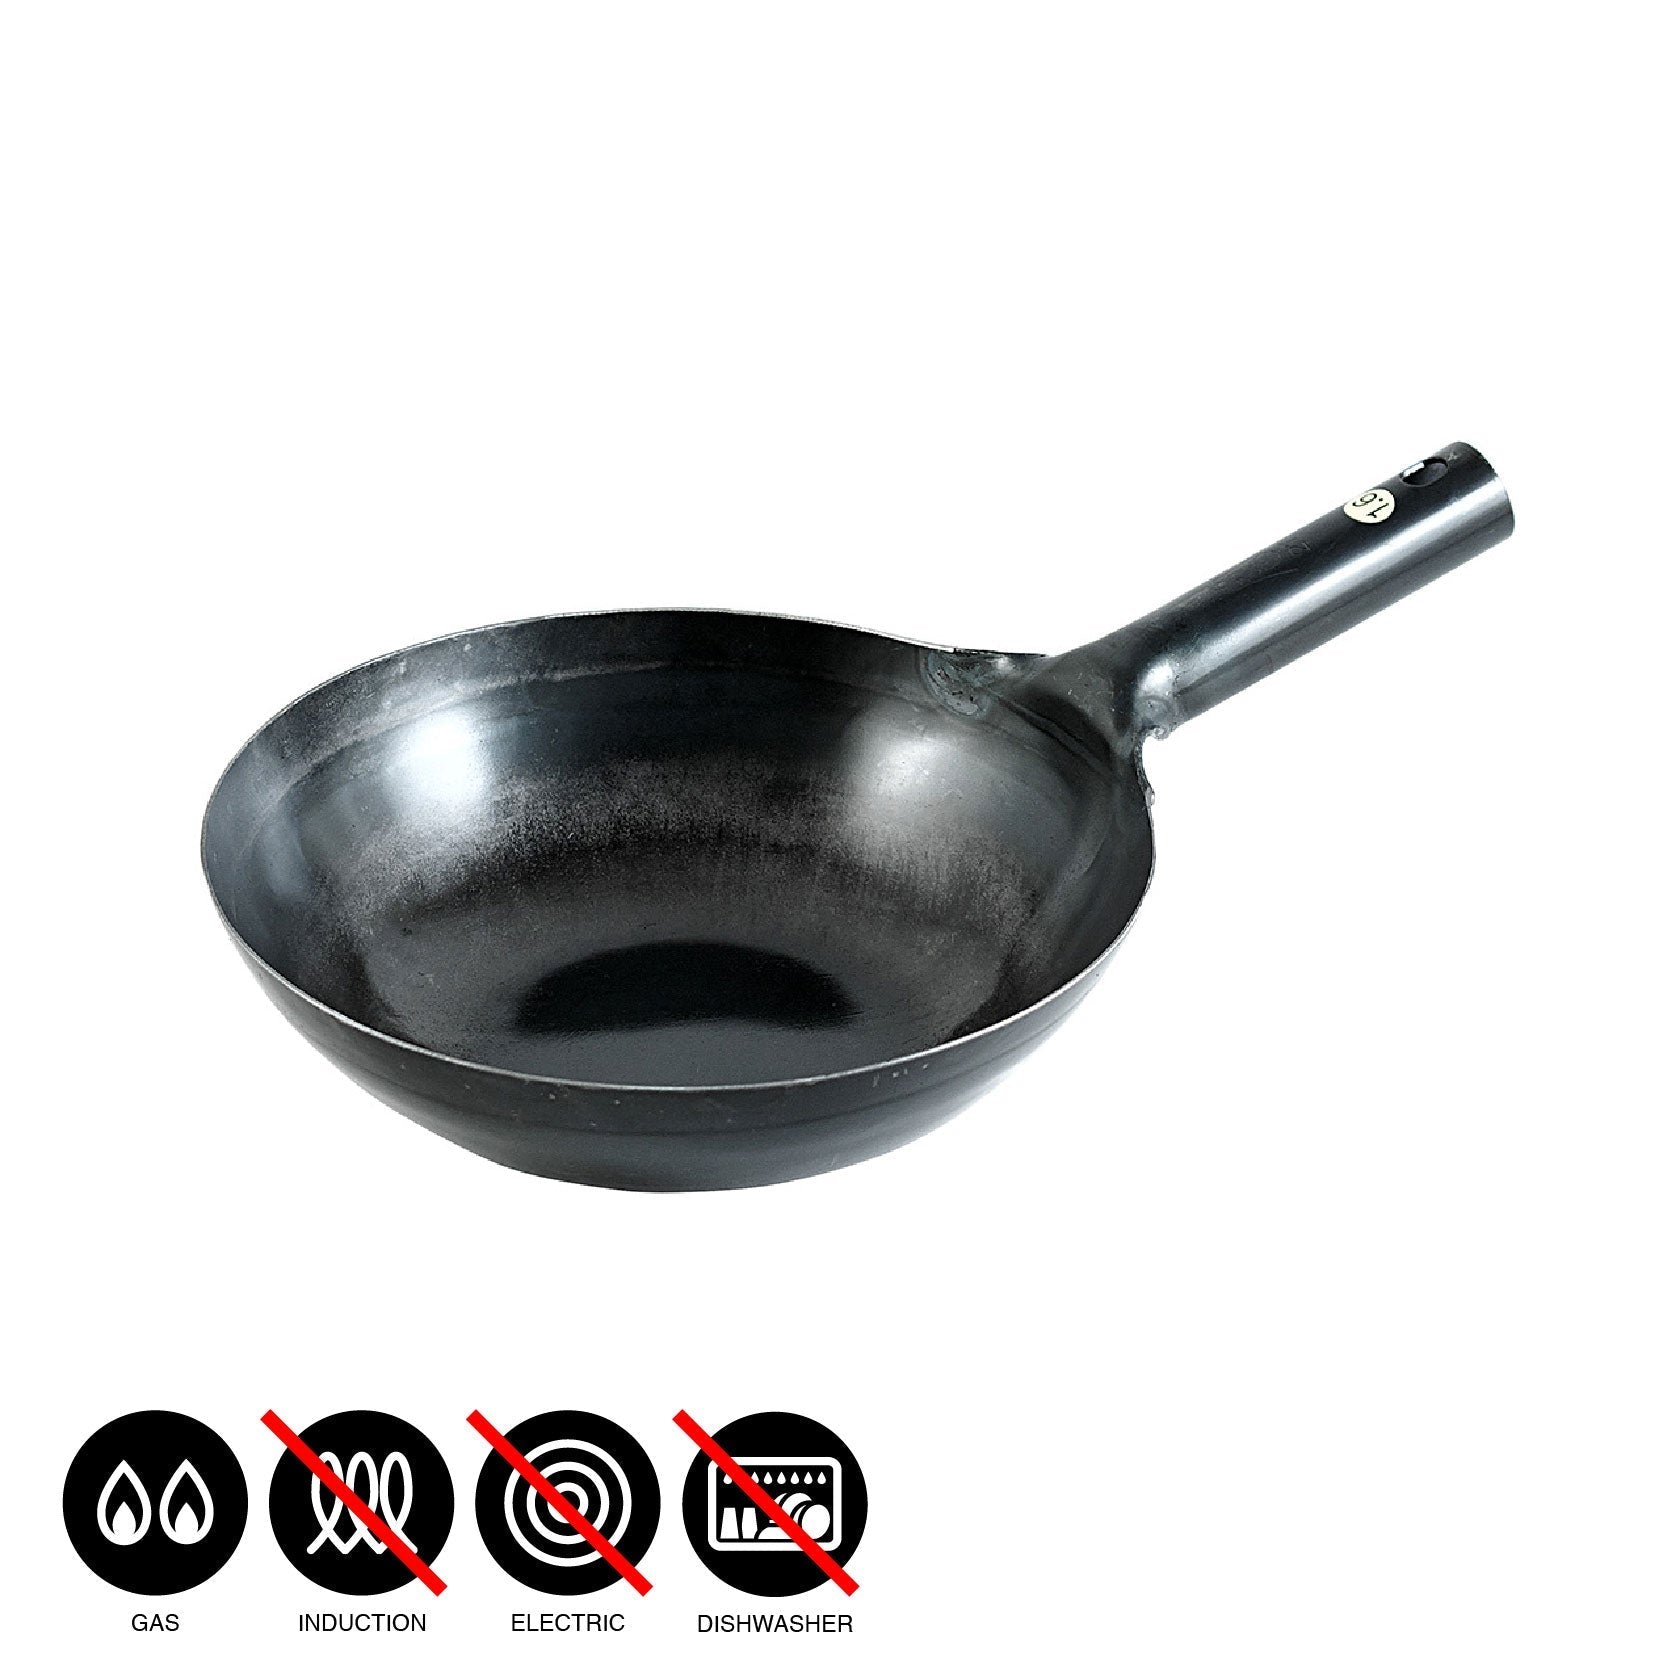 Hammered single handle wok 1.6mm / 270 - 330mm